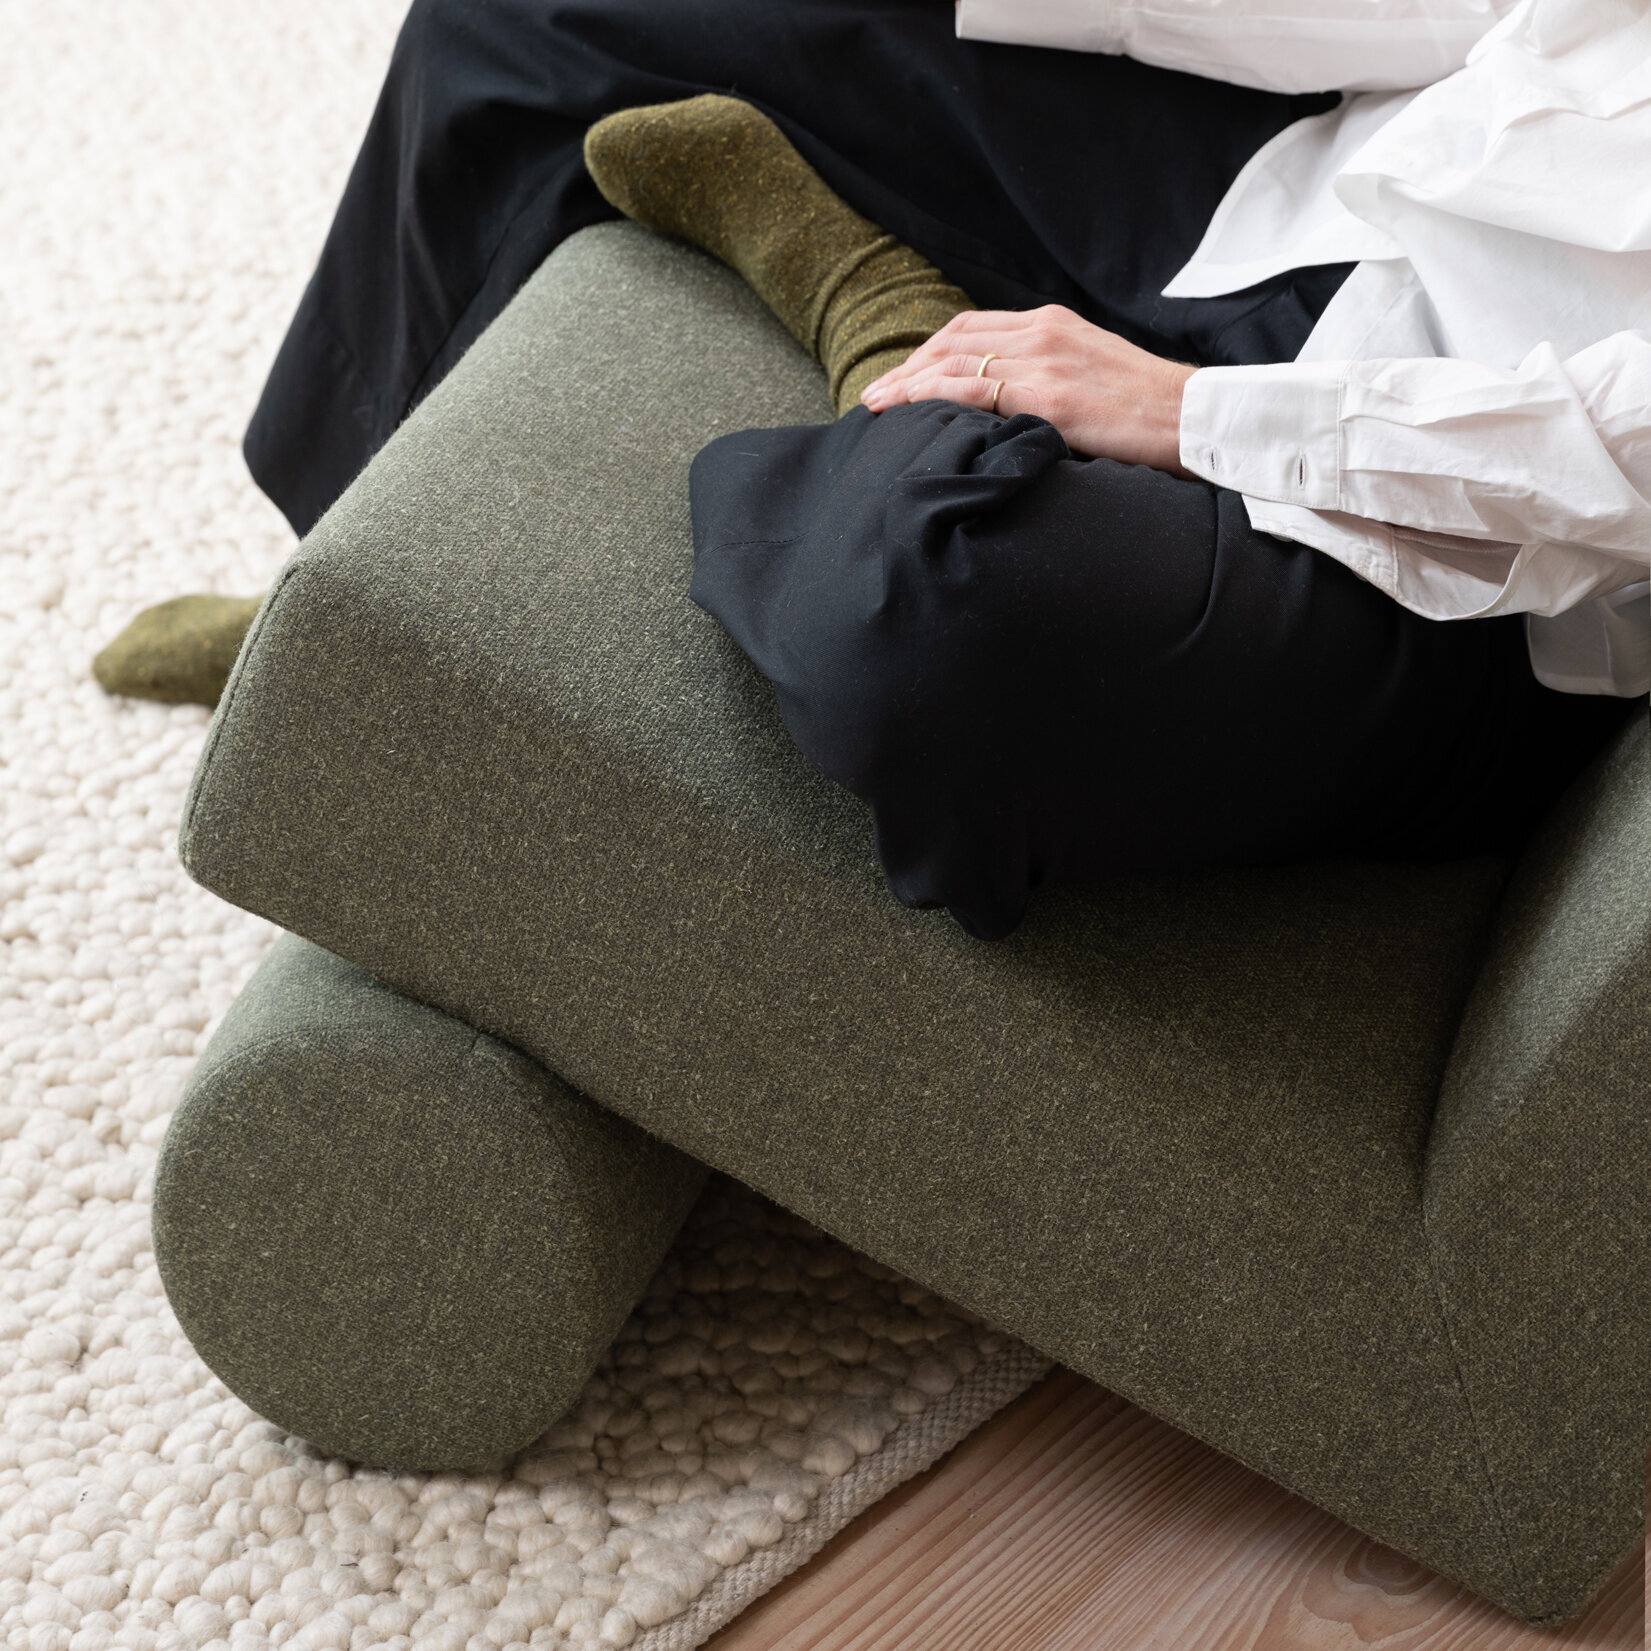 Design modern sofa | Lean Lounge Chair soil natural01 | Studio HENK| 